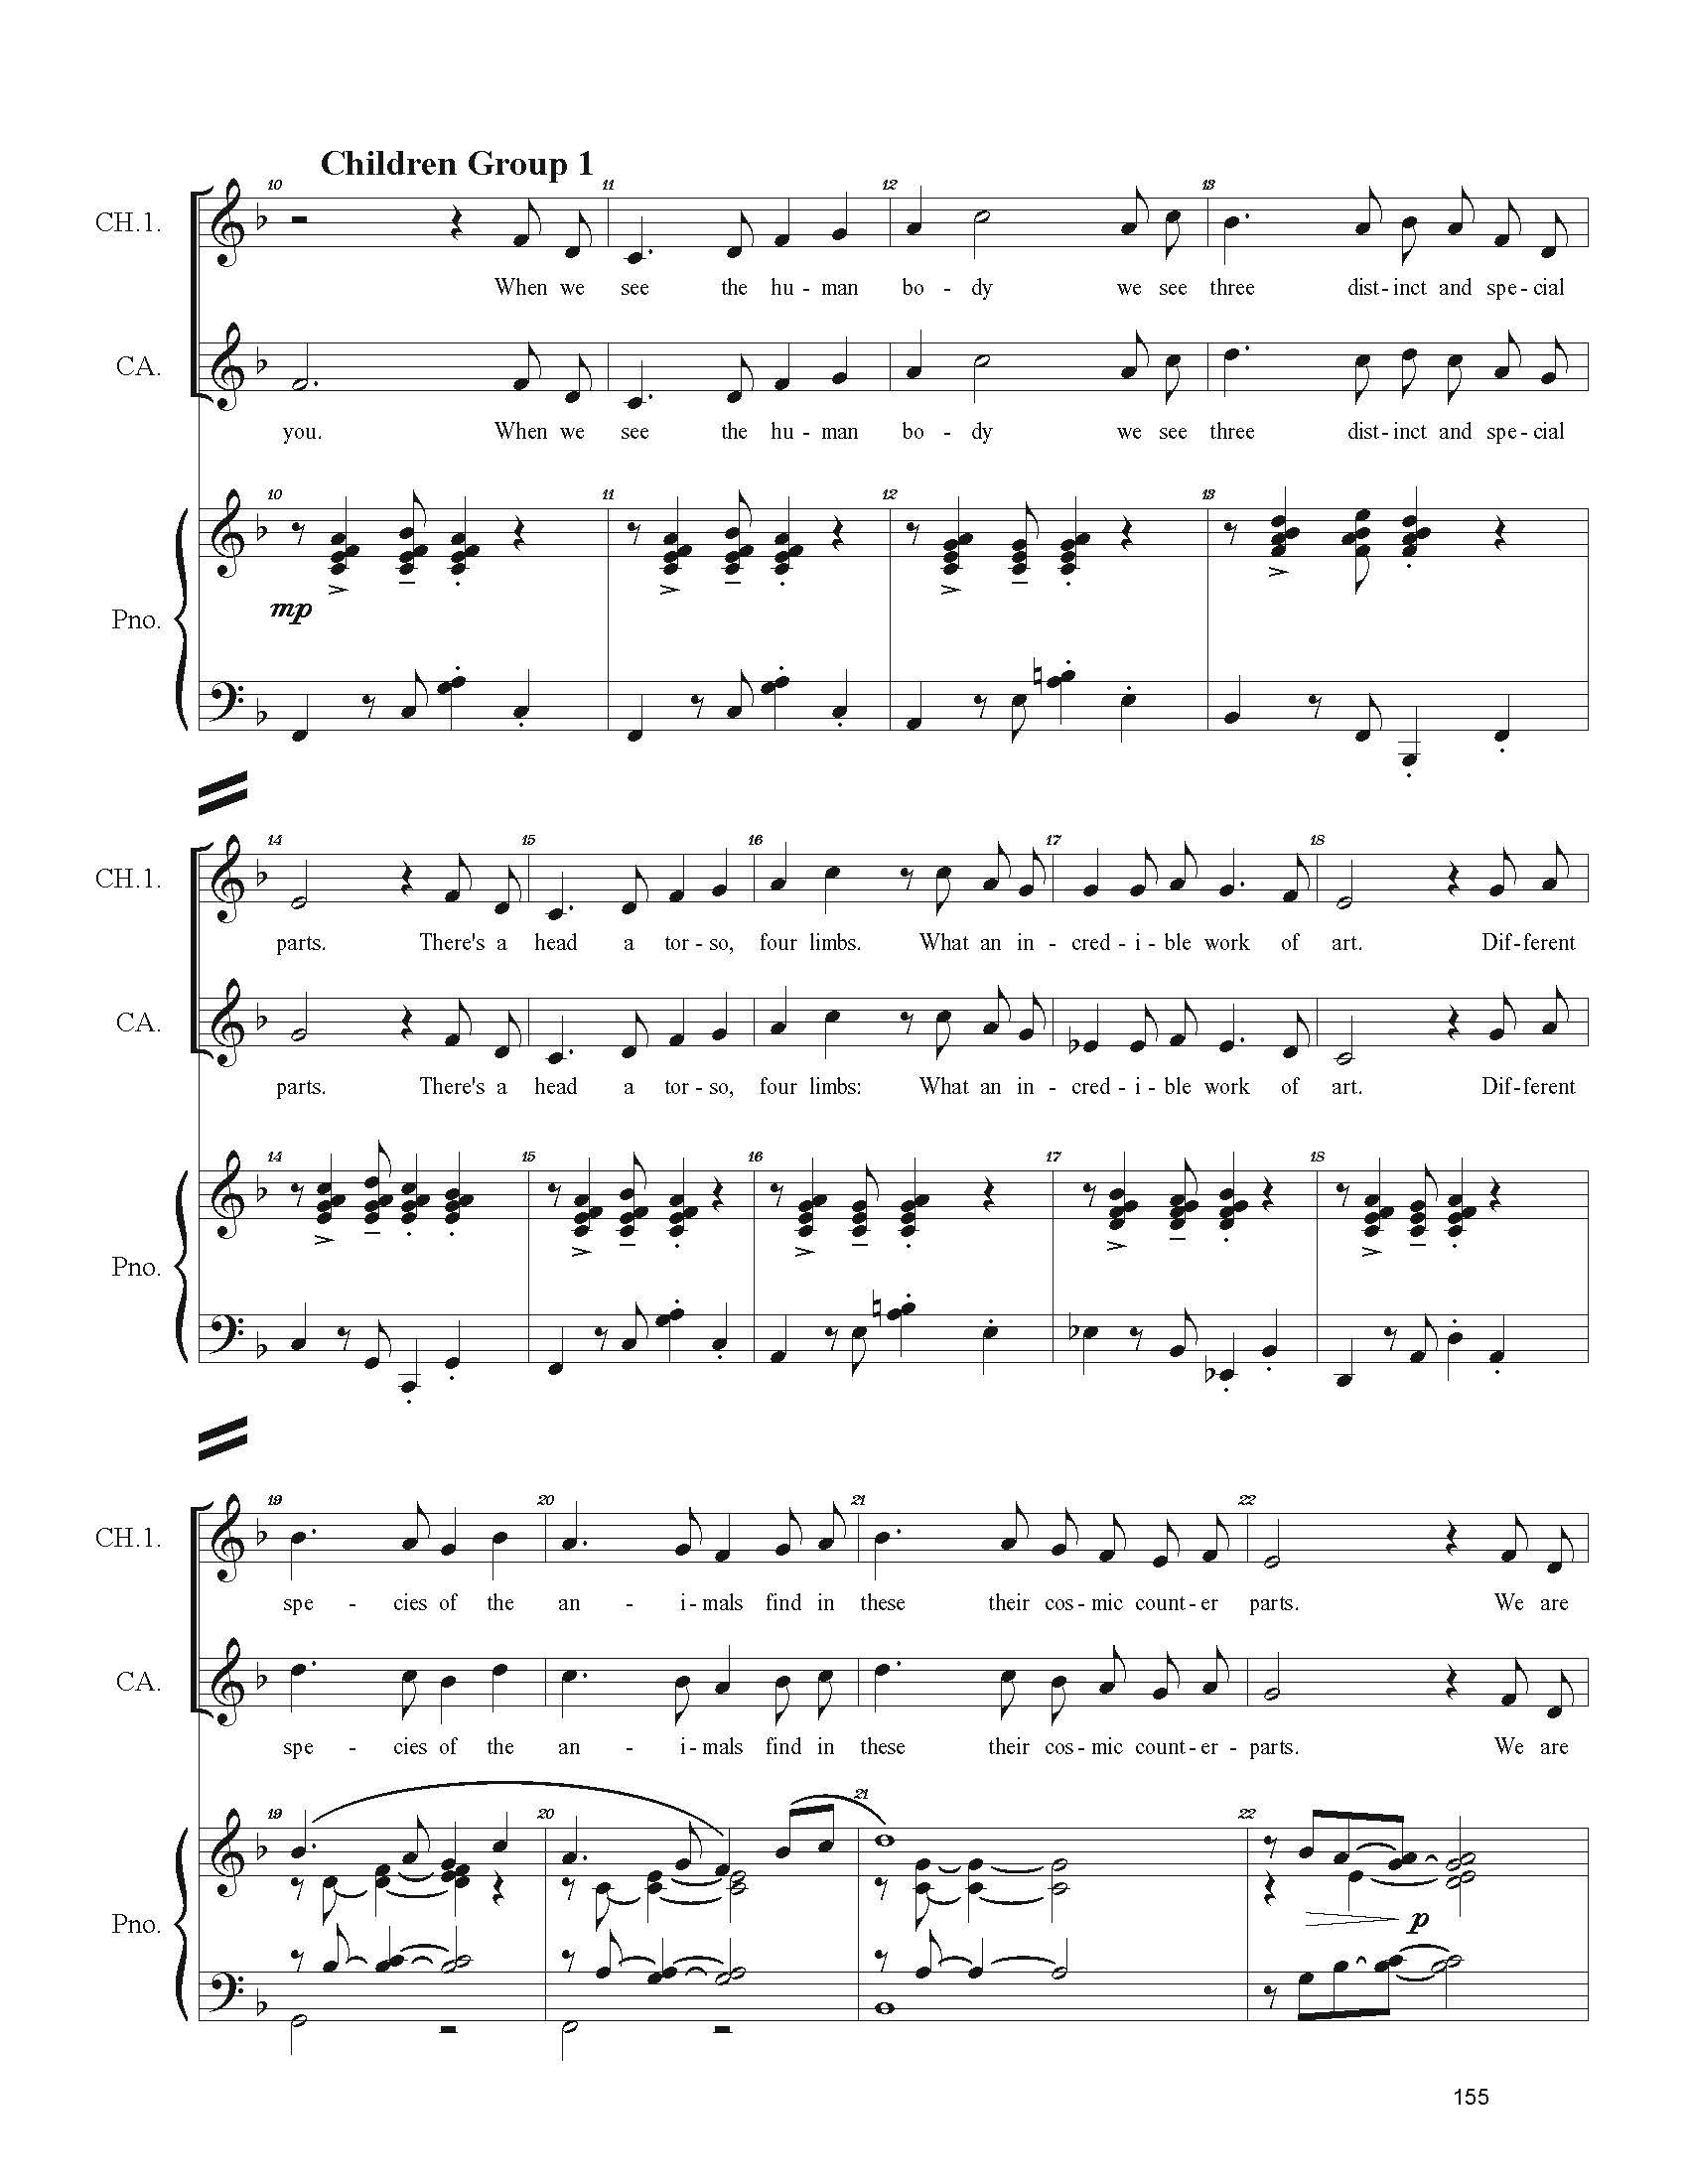 FULL PIANO VOCAL SCORE DRAFT 1 - Score_Page_155.jpg